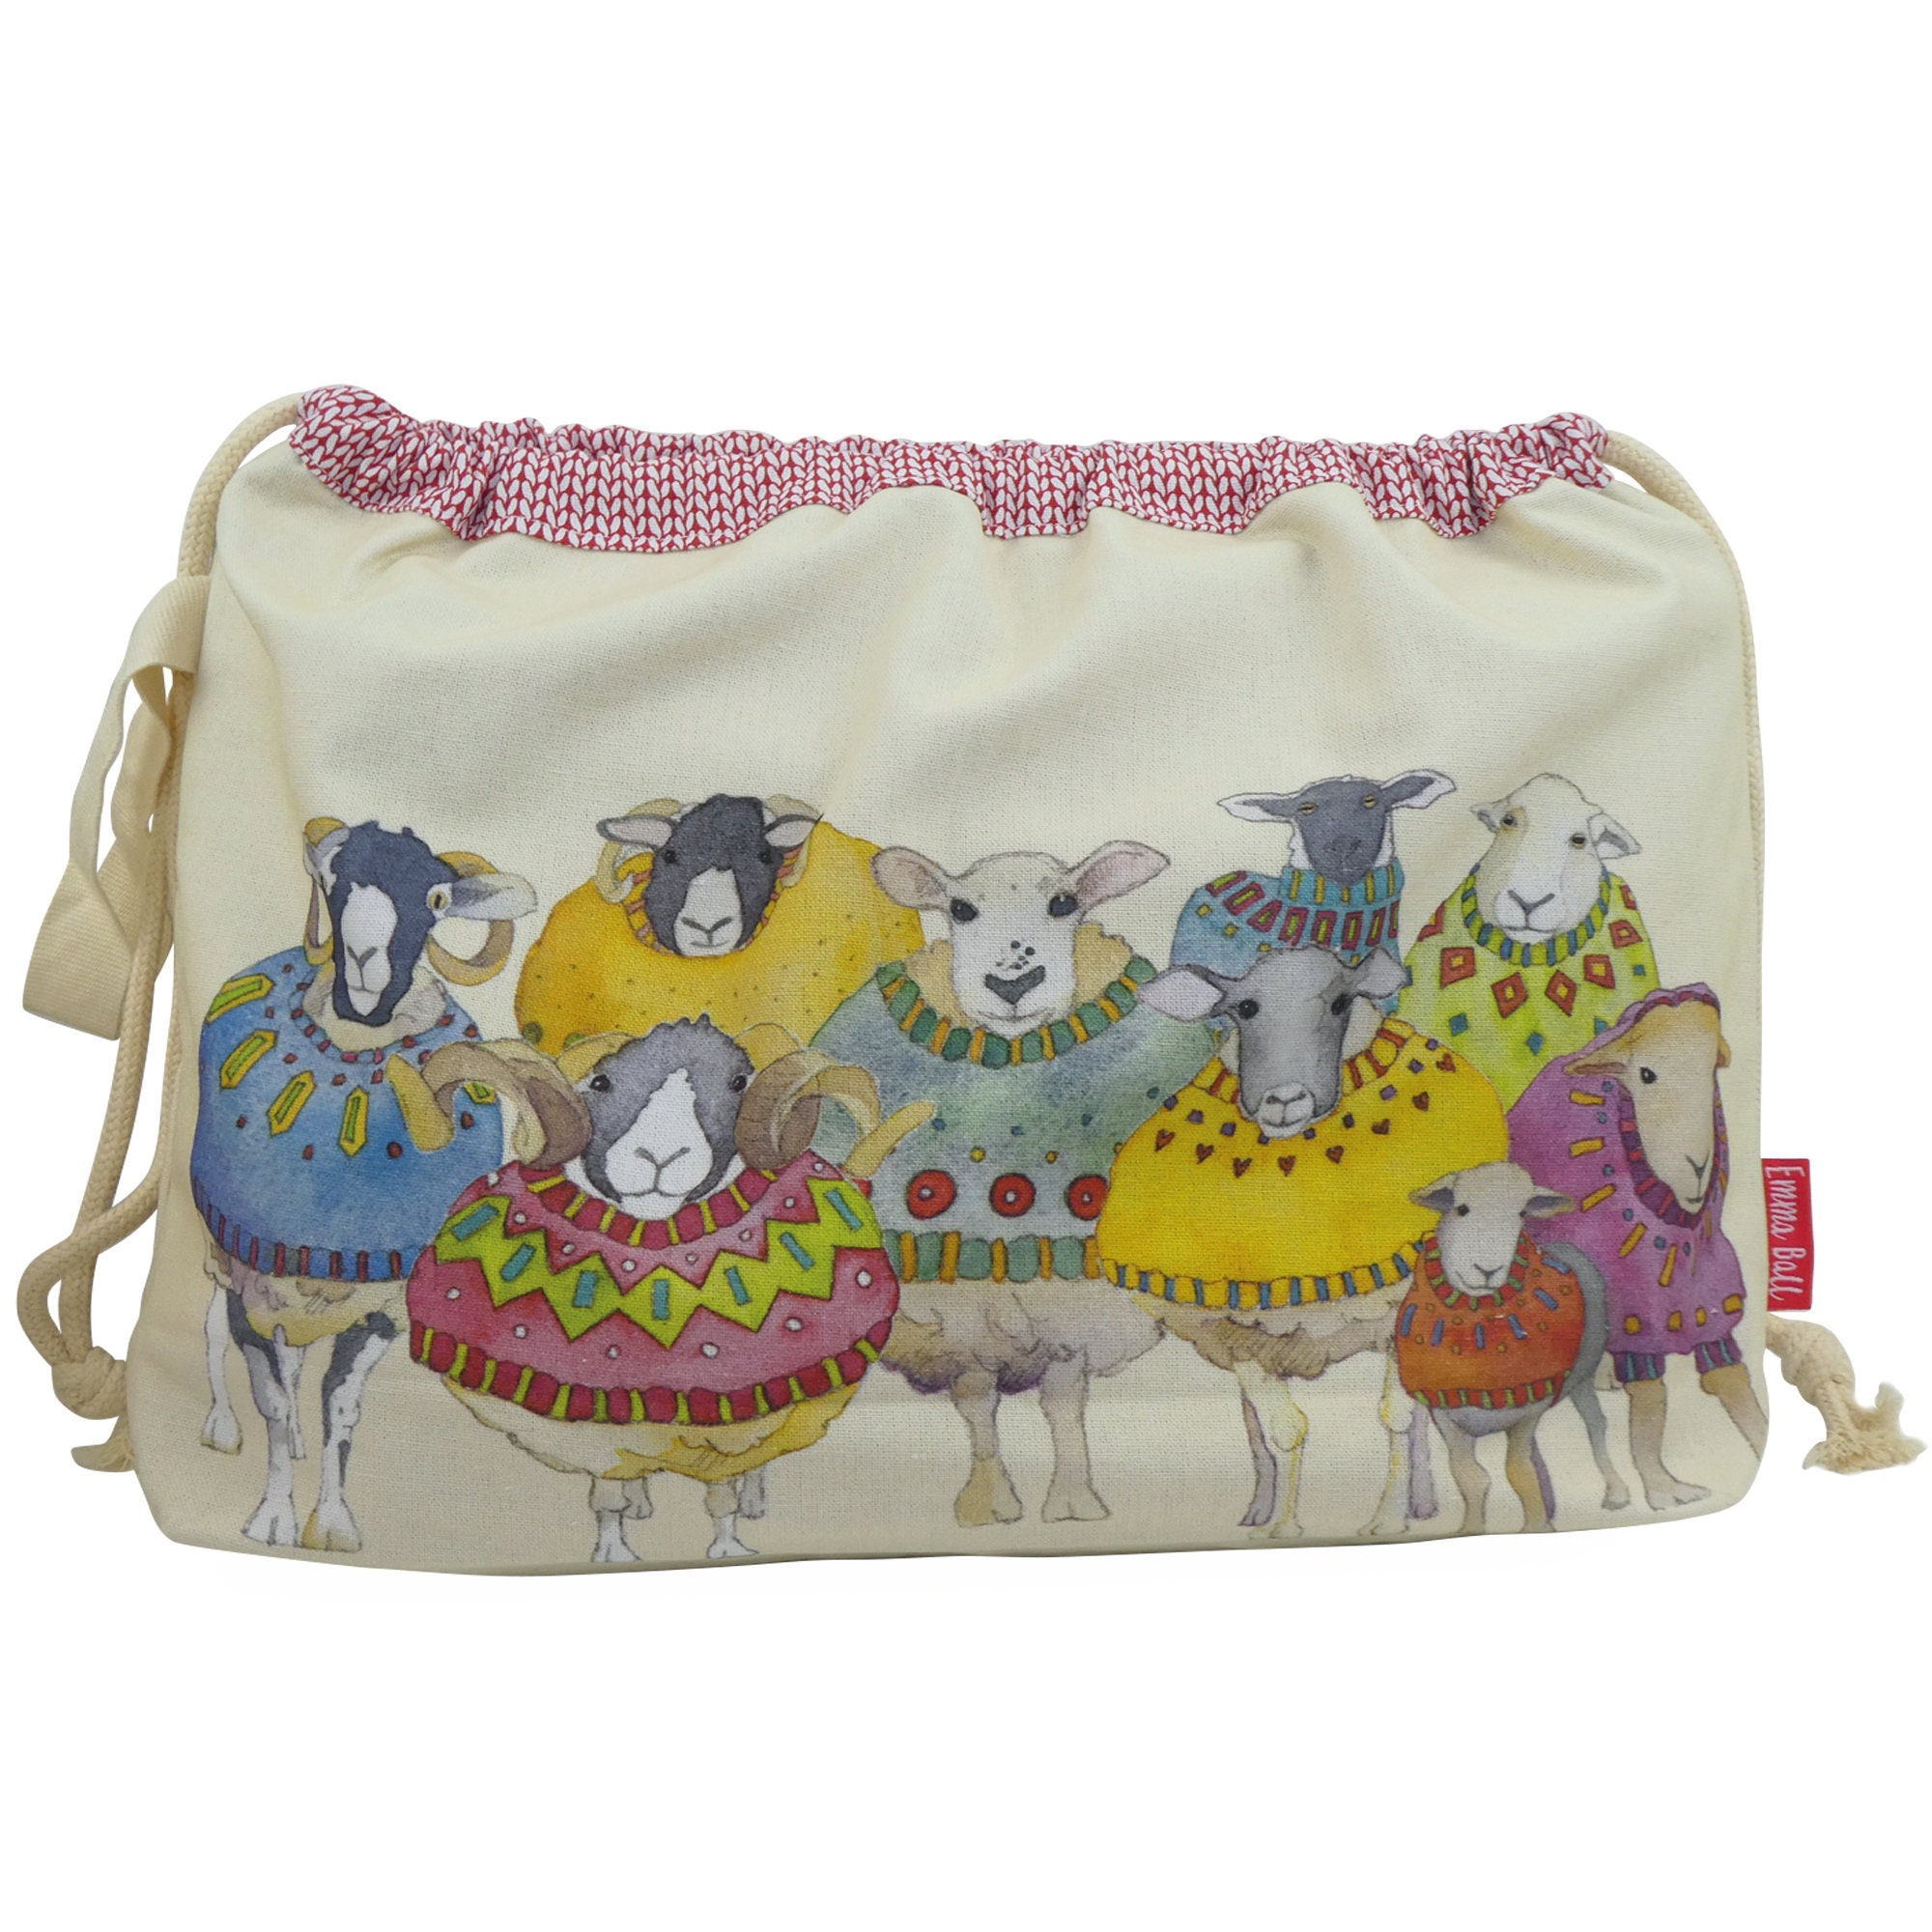 Chimney Sheep Cotton String Bag